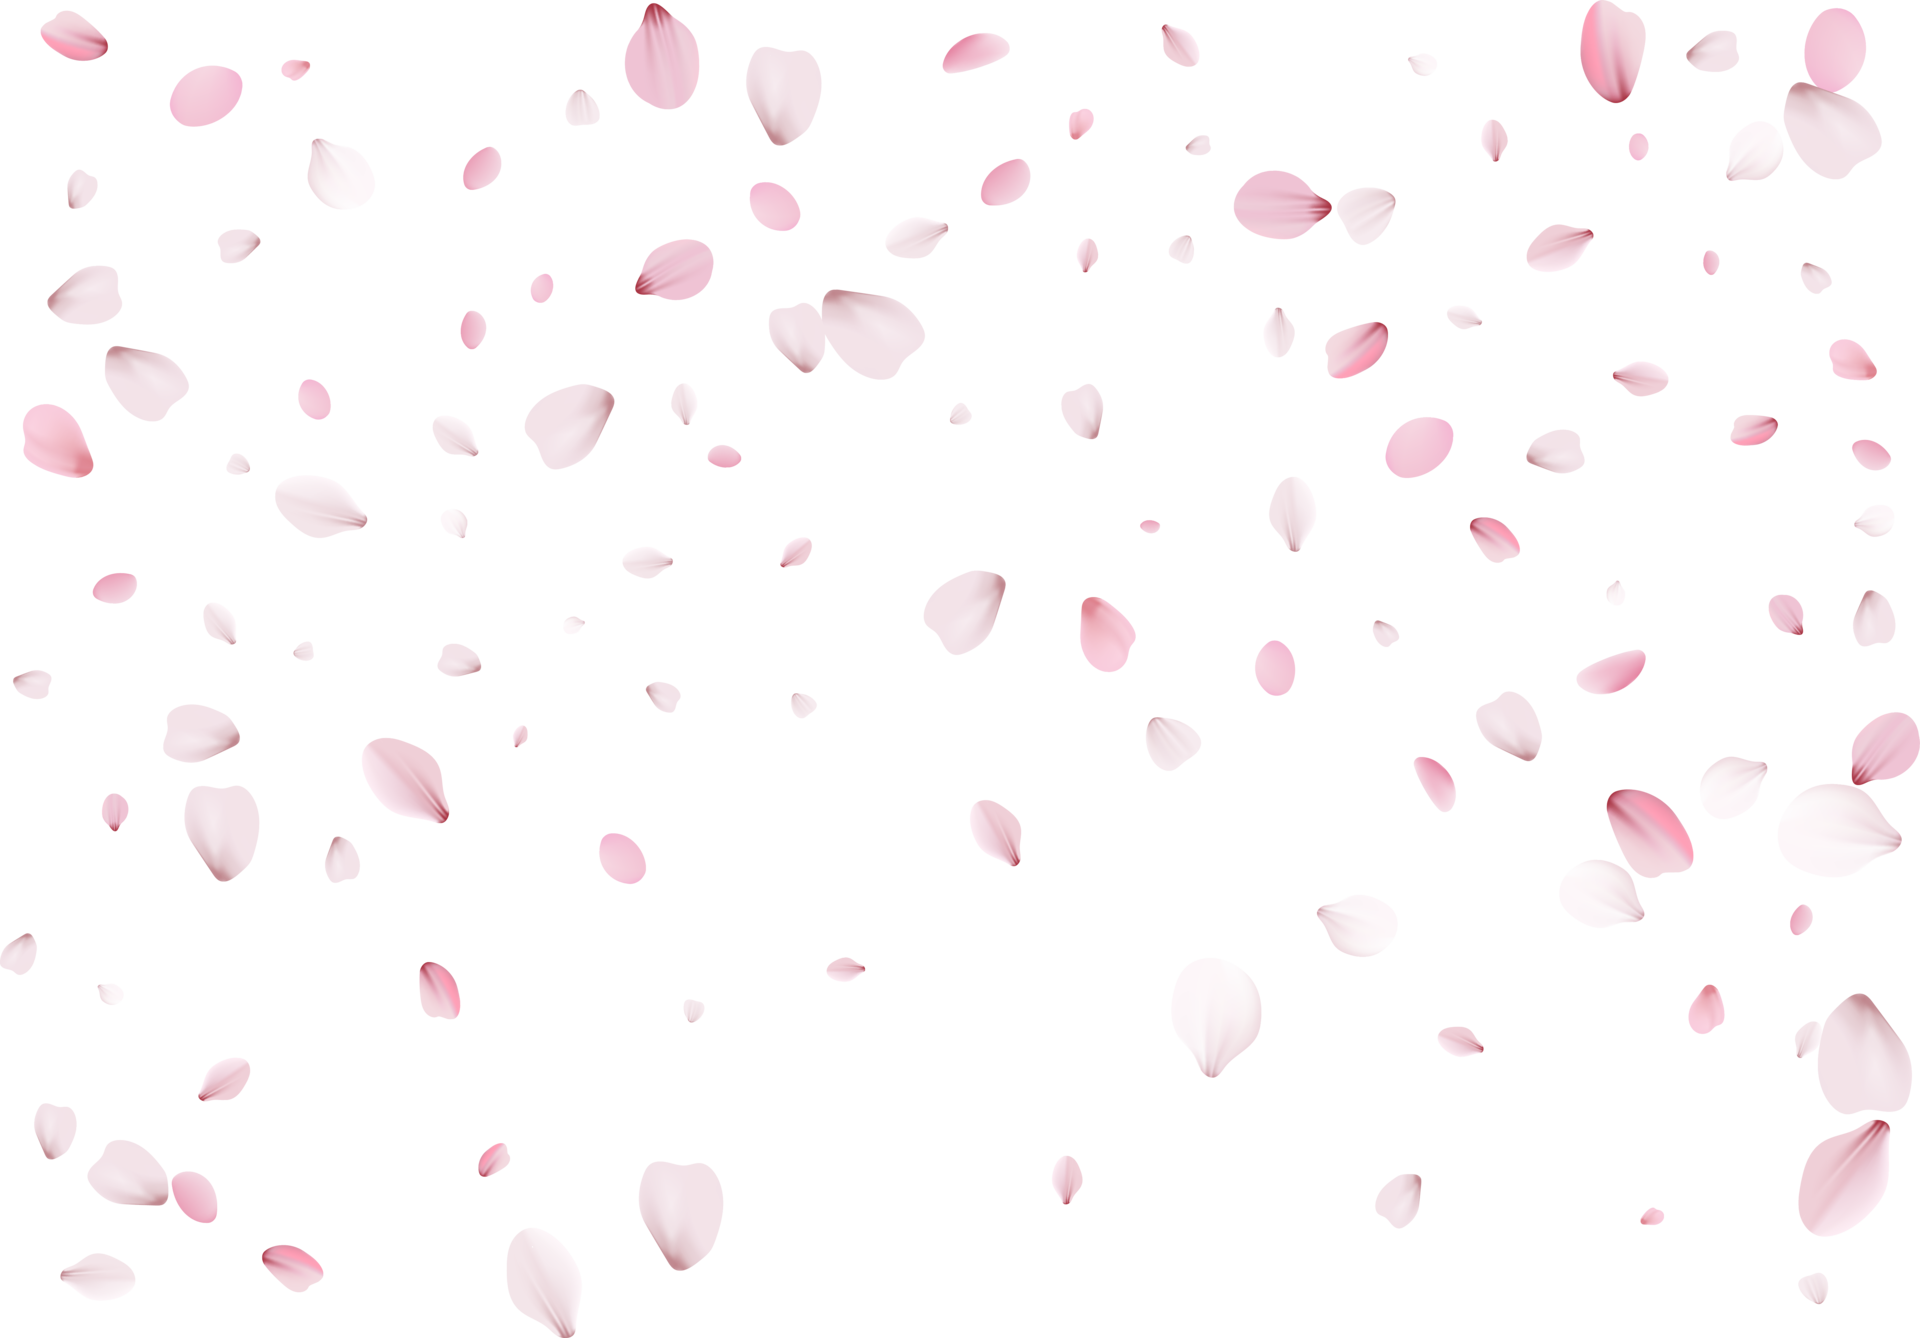 4. Sakura Hauno Nail Color in "Petals and Pink" shade - wide 7